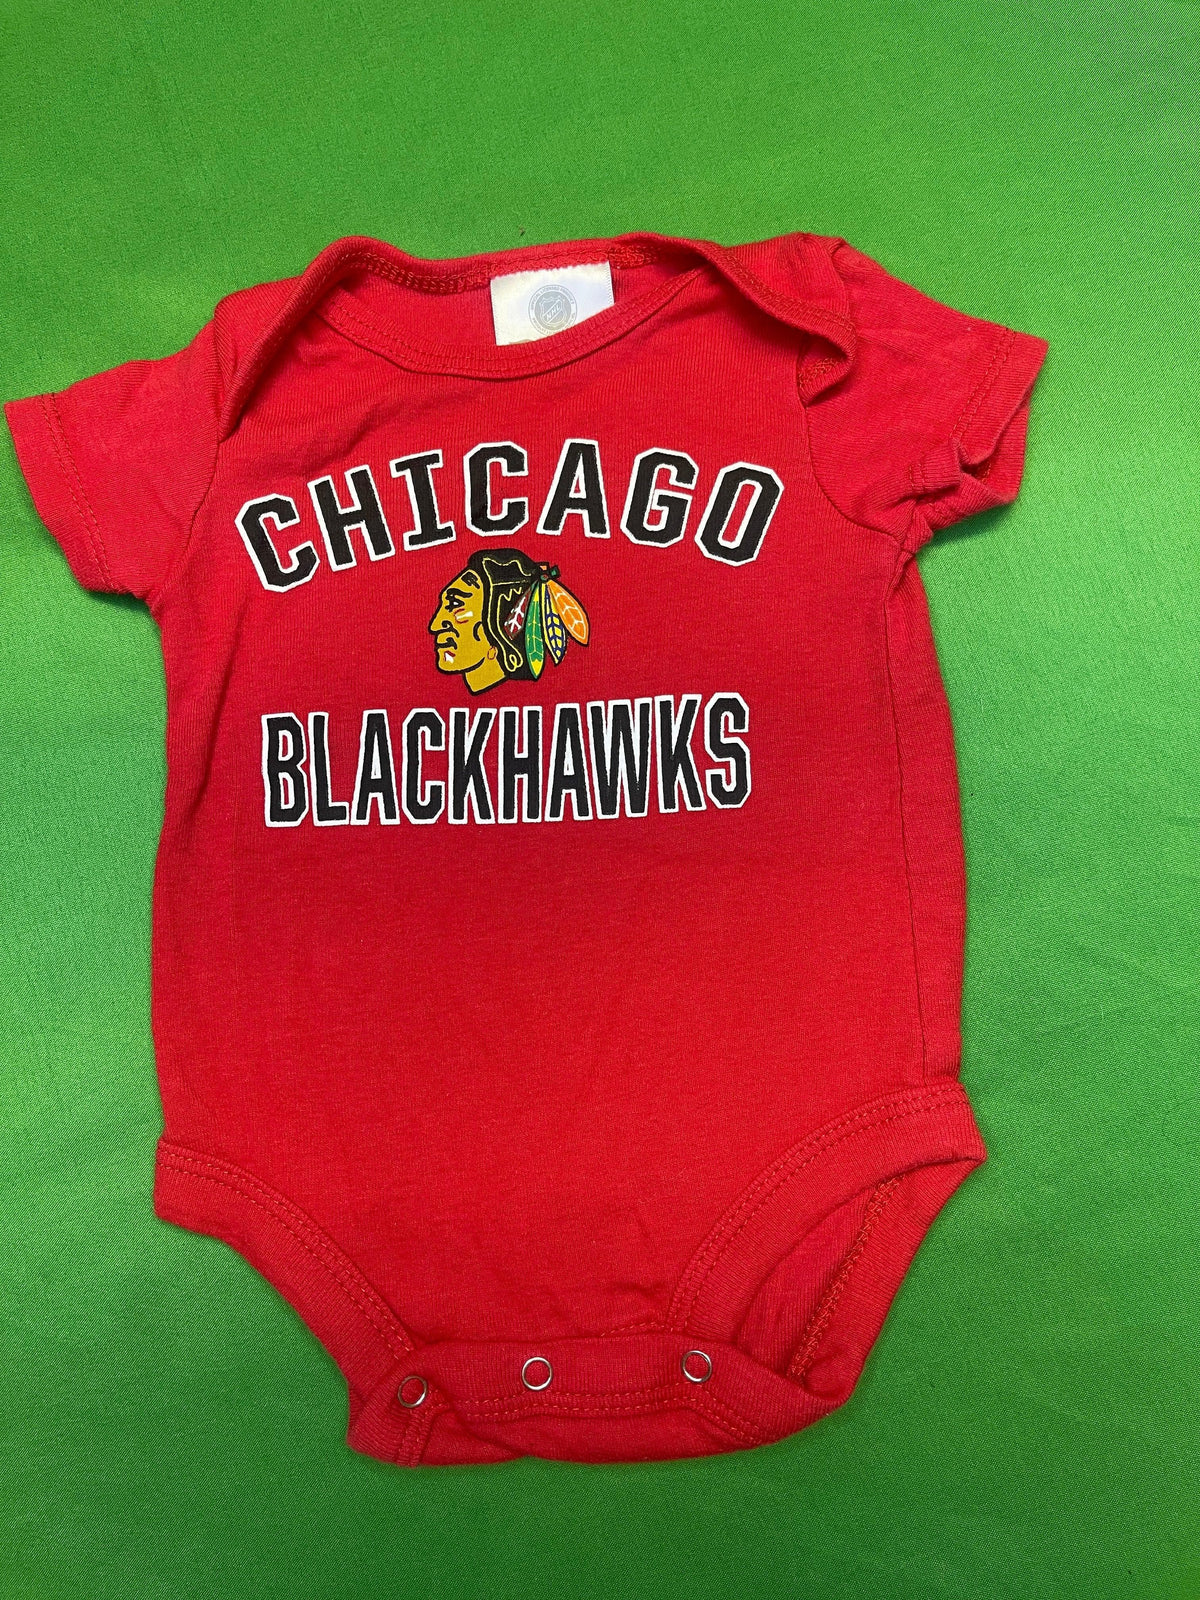 NHL Chicago Blackhawks Fanatics Infant Bodysuit/Vest Newborn 0-3 months